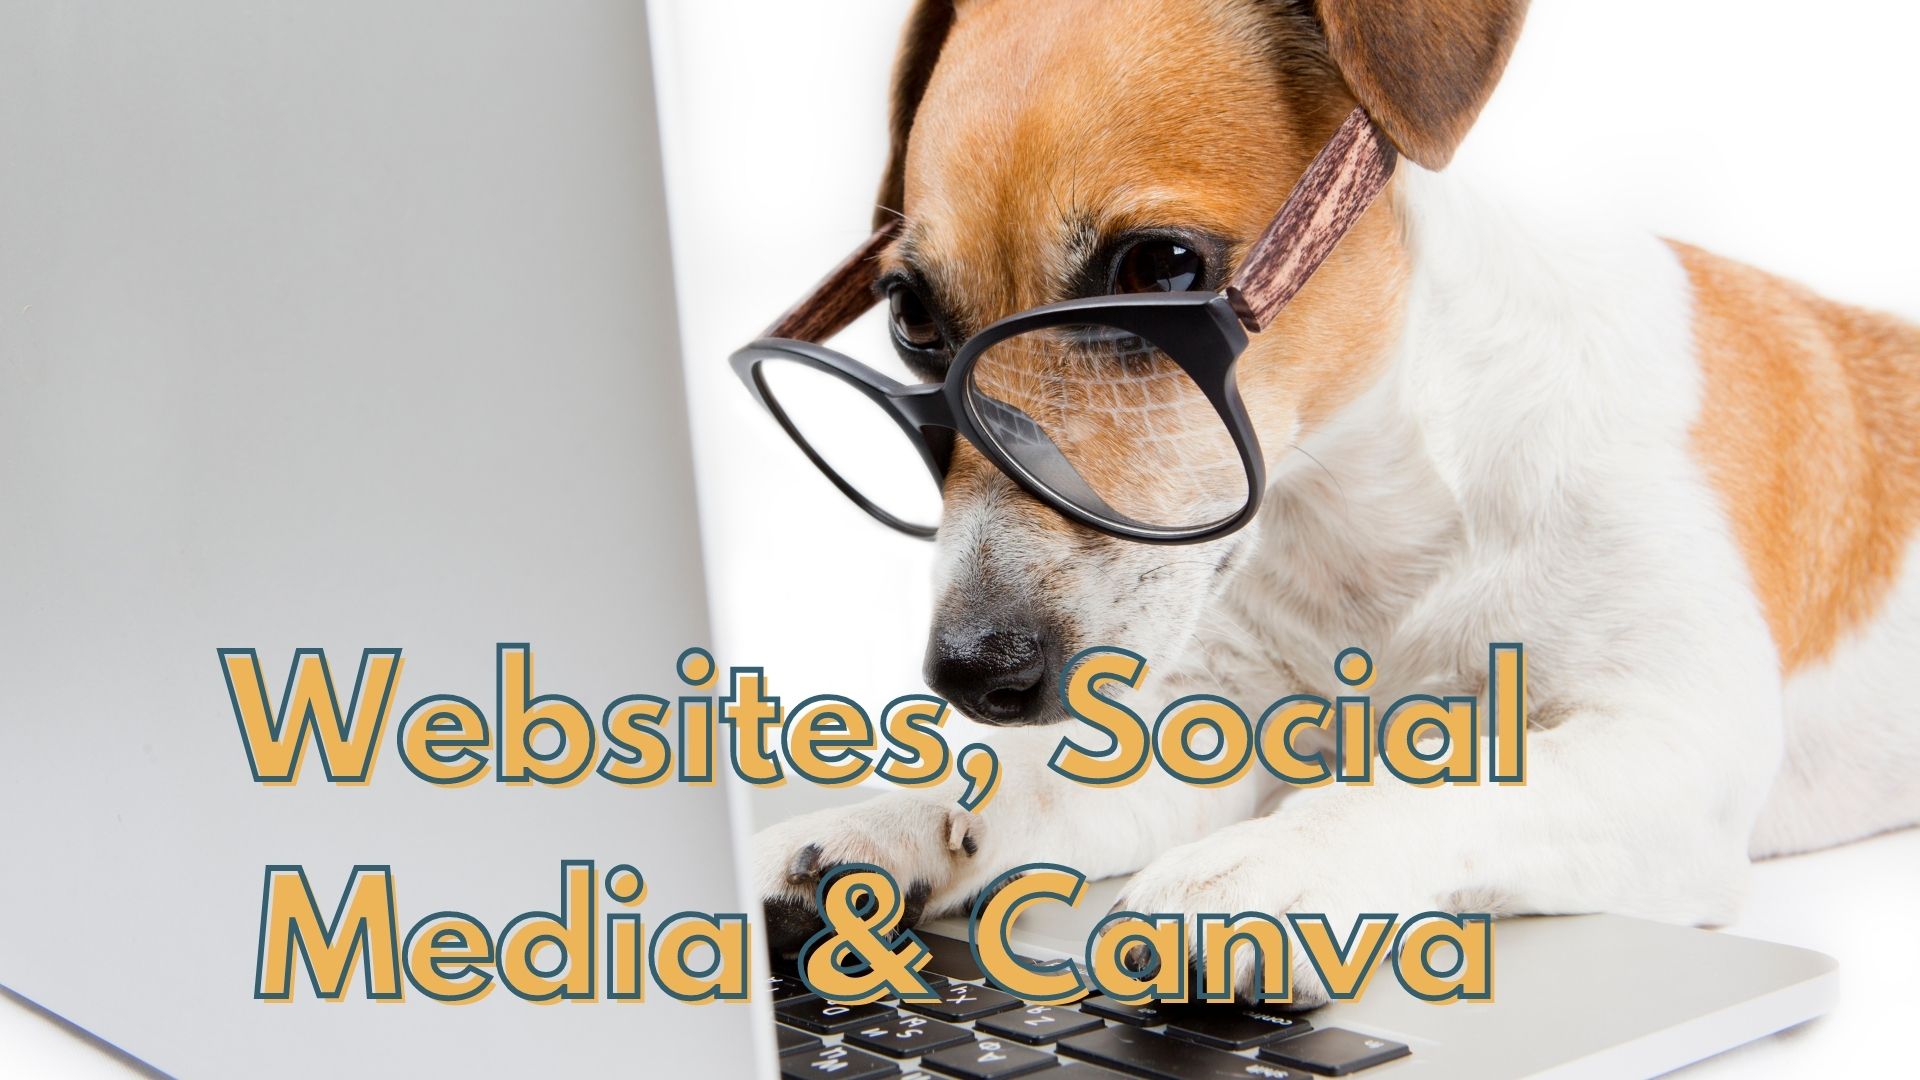 Workshop: Websites, Social Media, & Canva